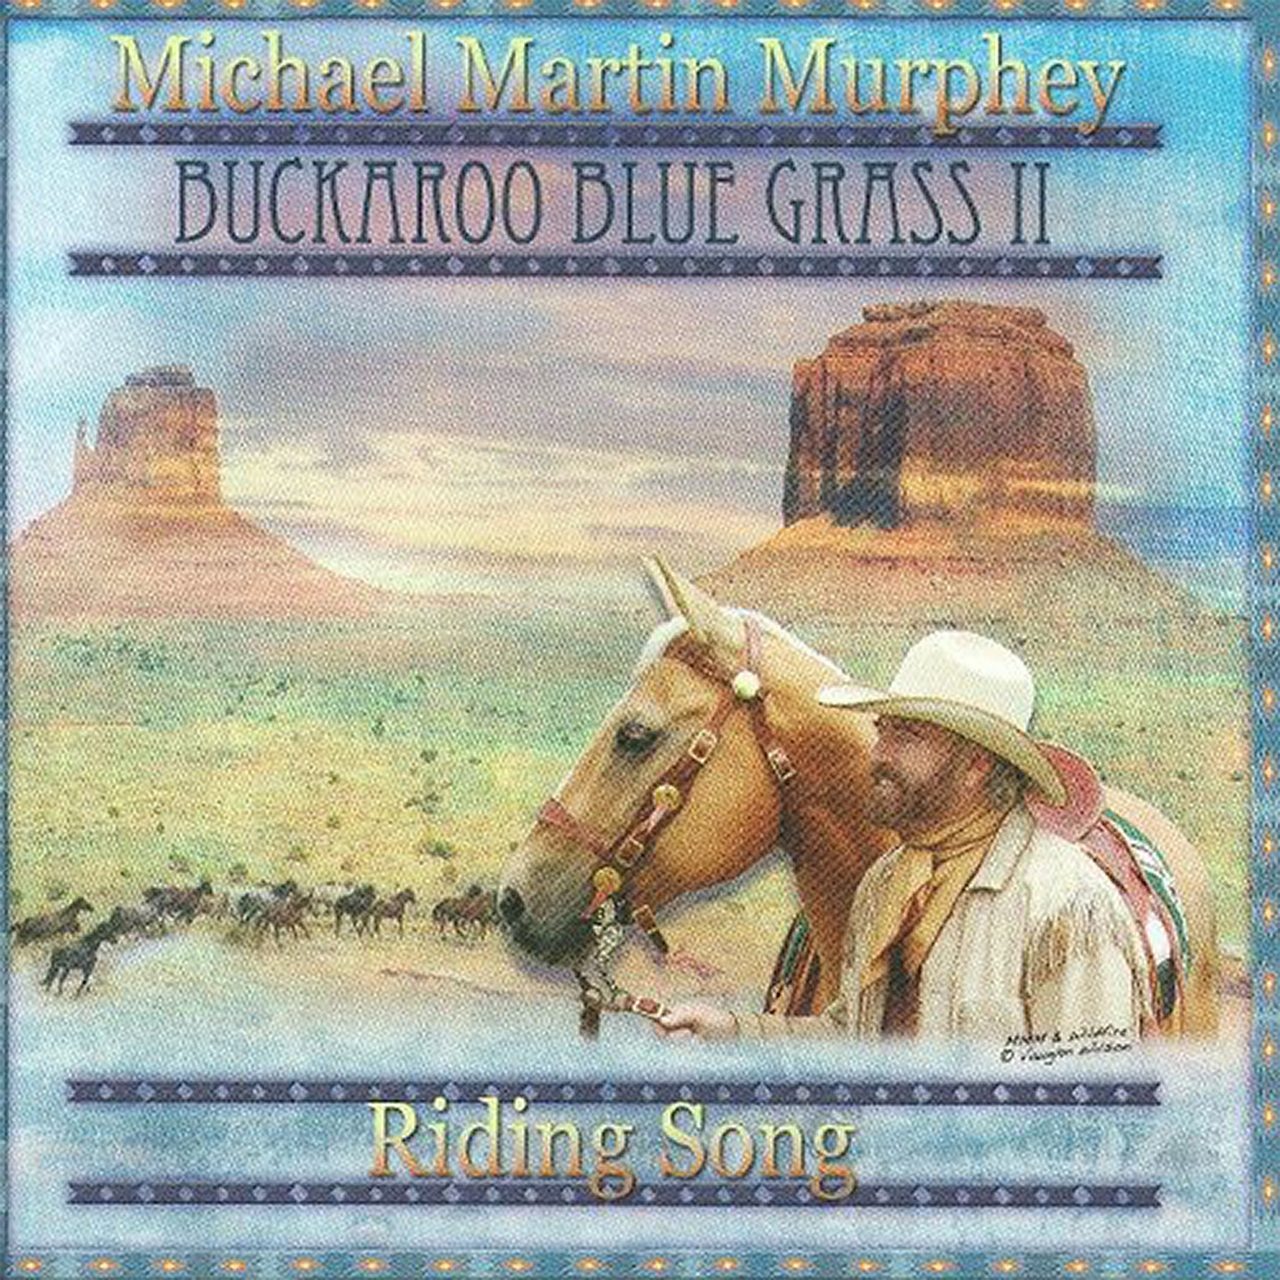 Michael Martin Murphey – Buckaroo Blue Grass II – Riding Song cover album